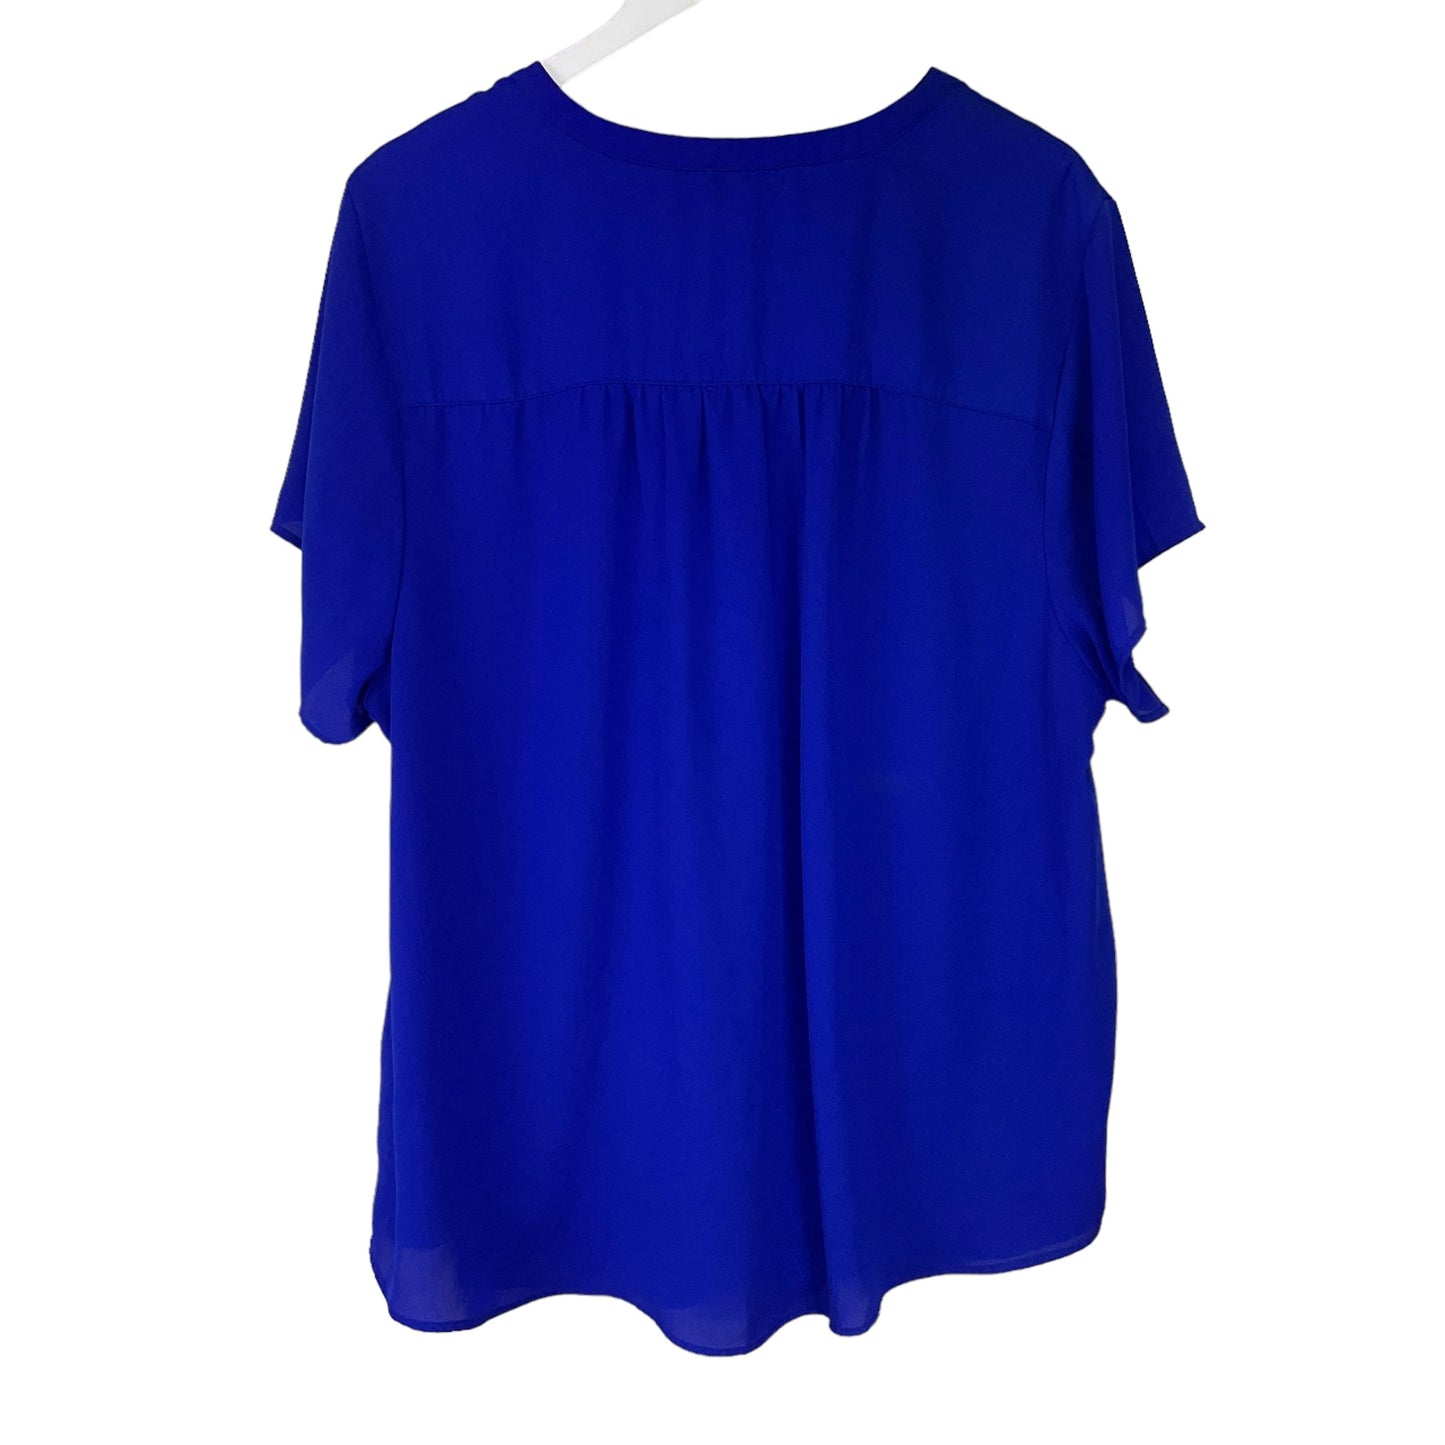 Blue Blouse Short Sleeve Torrid, Size 3x